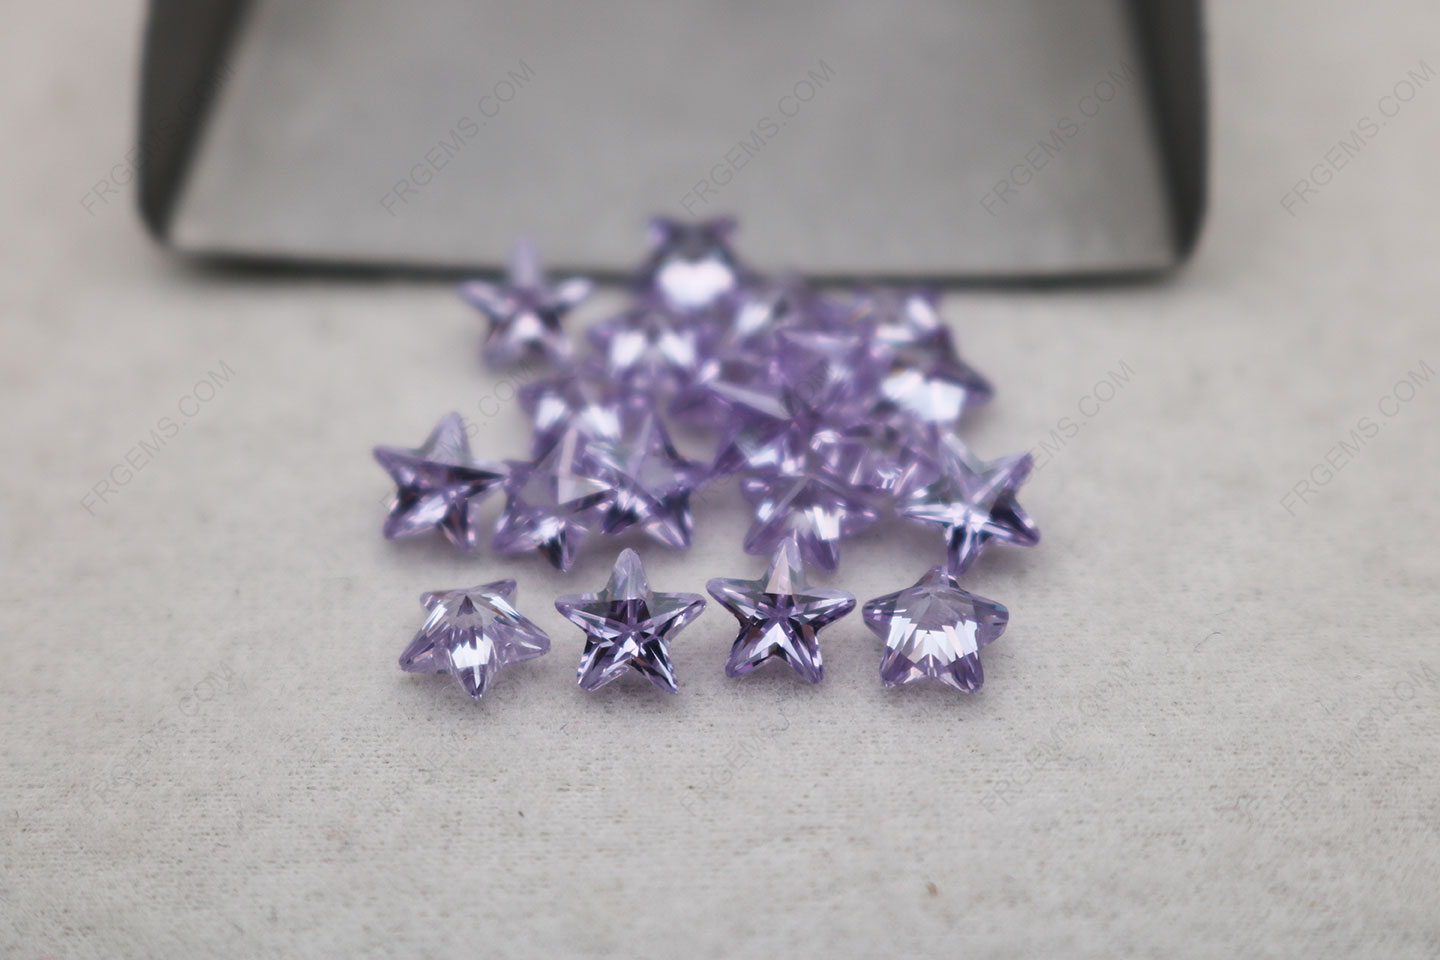 Five Point Star Faceted Cut Loose Cubic Zirconia Lavender Color 6x6mm gemstones wholesale